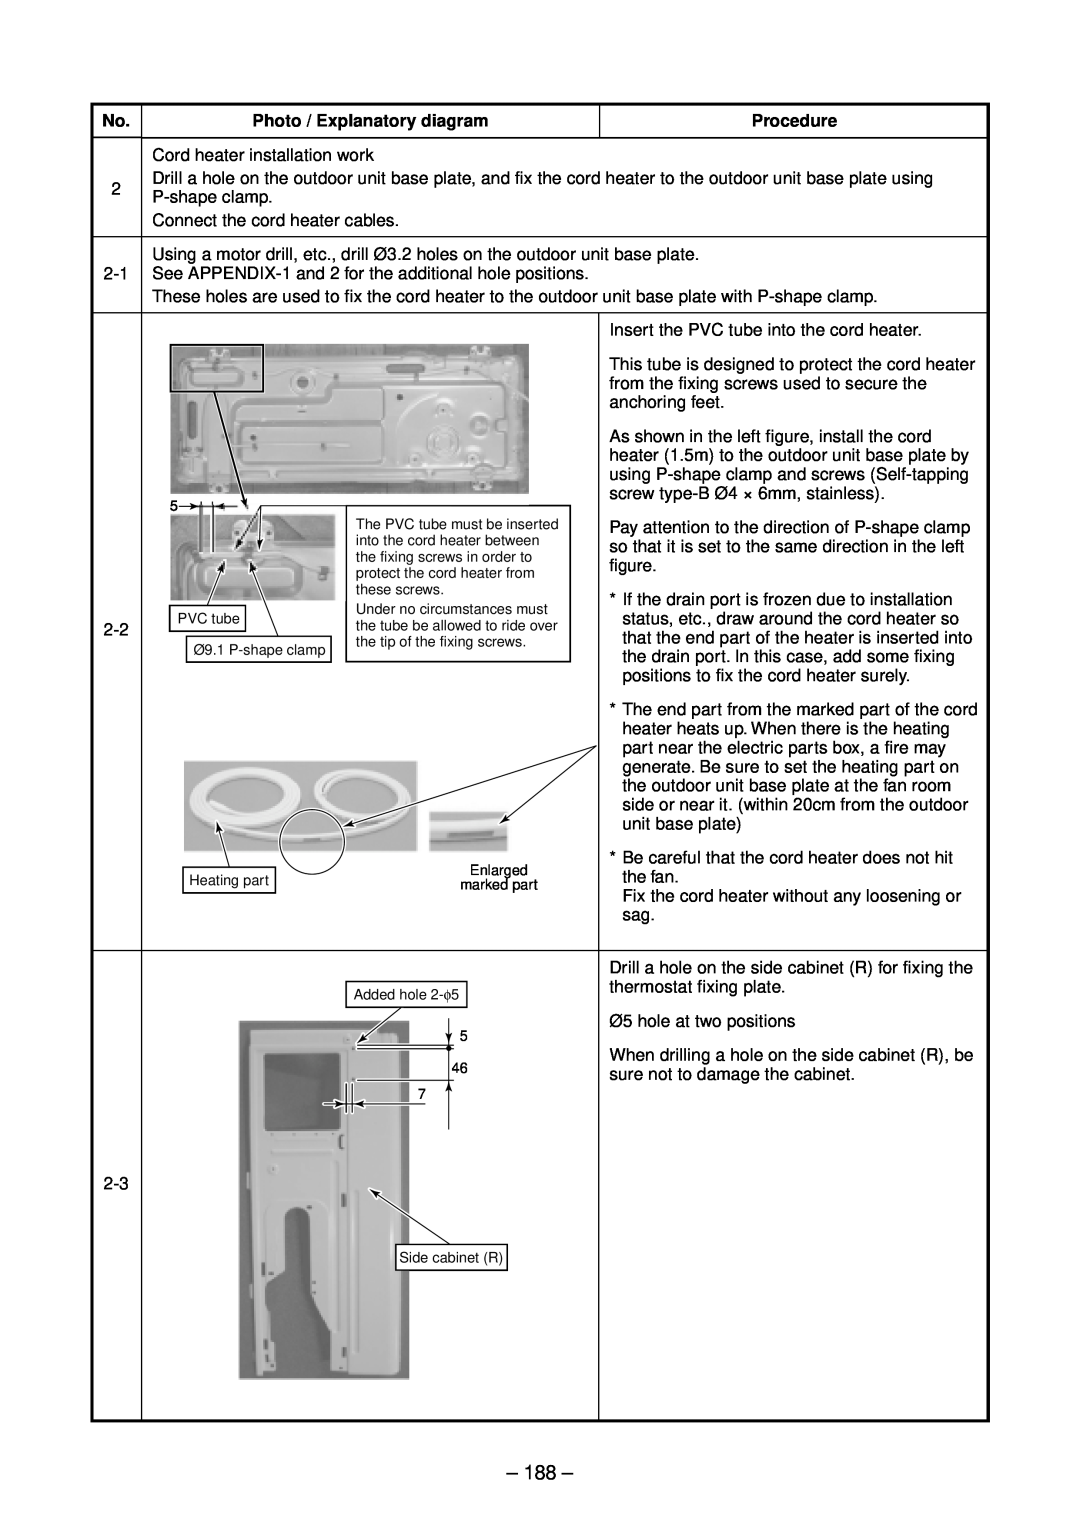 Toshiba RAV-SM803AT-E, RAV-SM1102CT-E, RAV-SM1102BT-E Photo / Explanatory diagram, Procedure, Cord heater installation work 